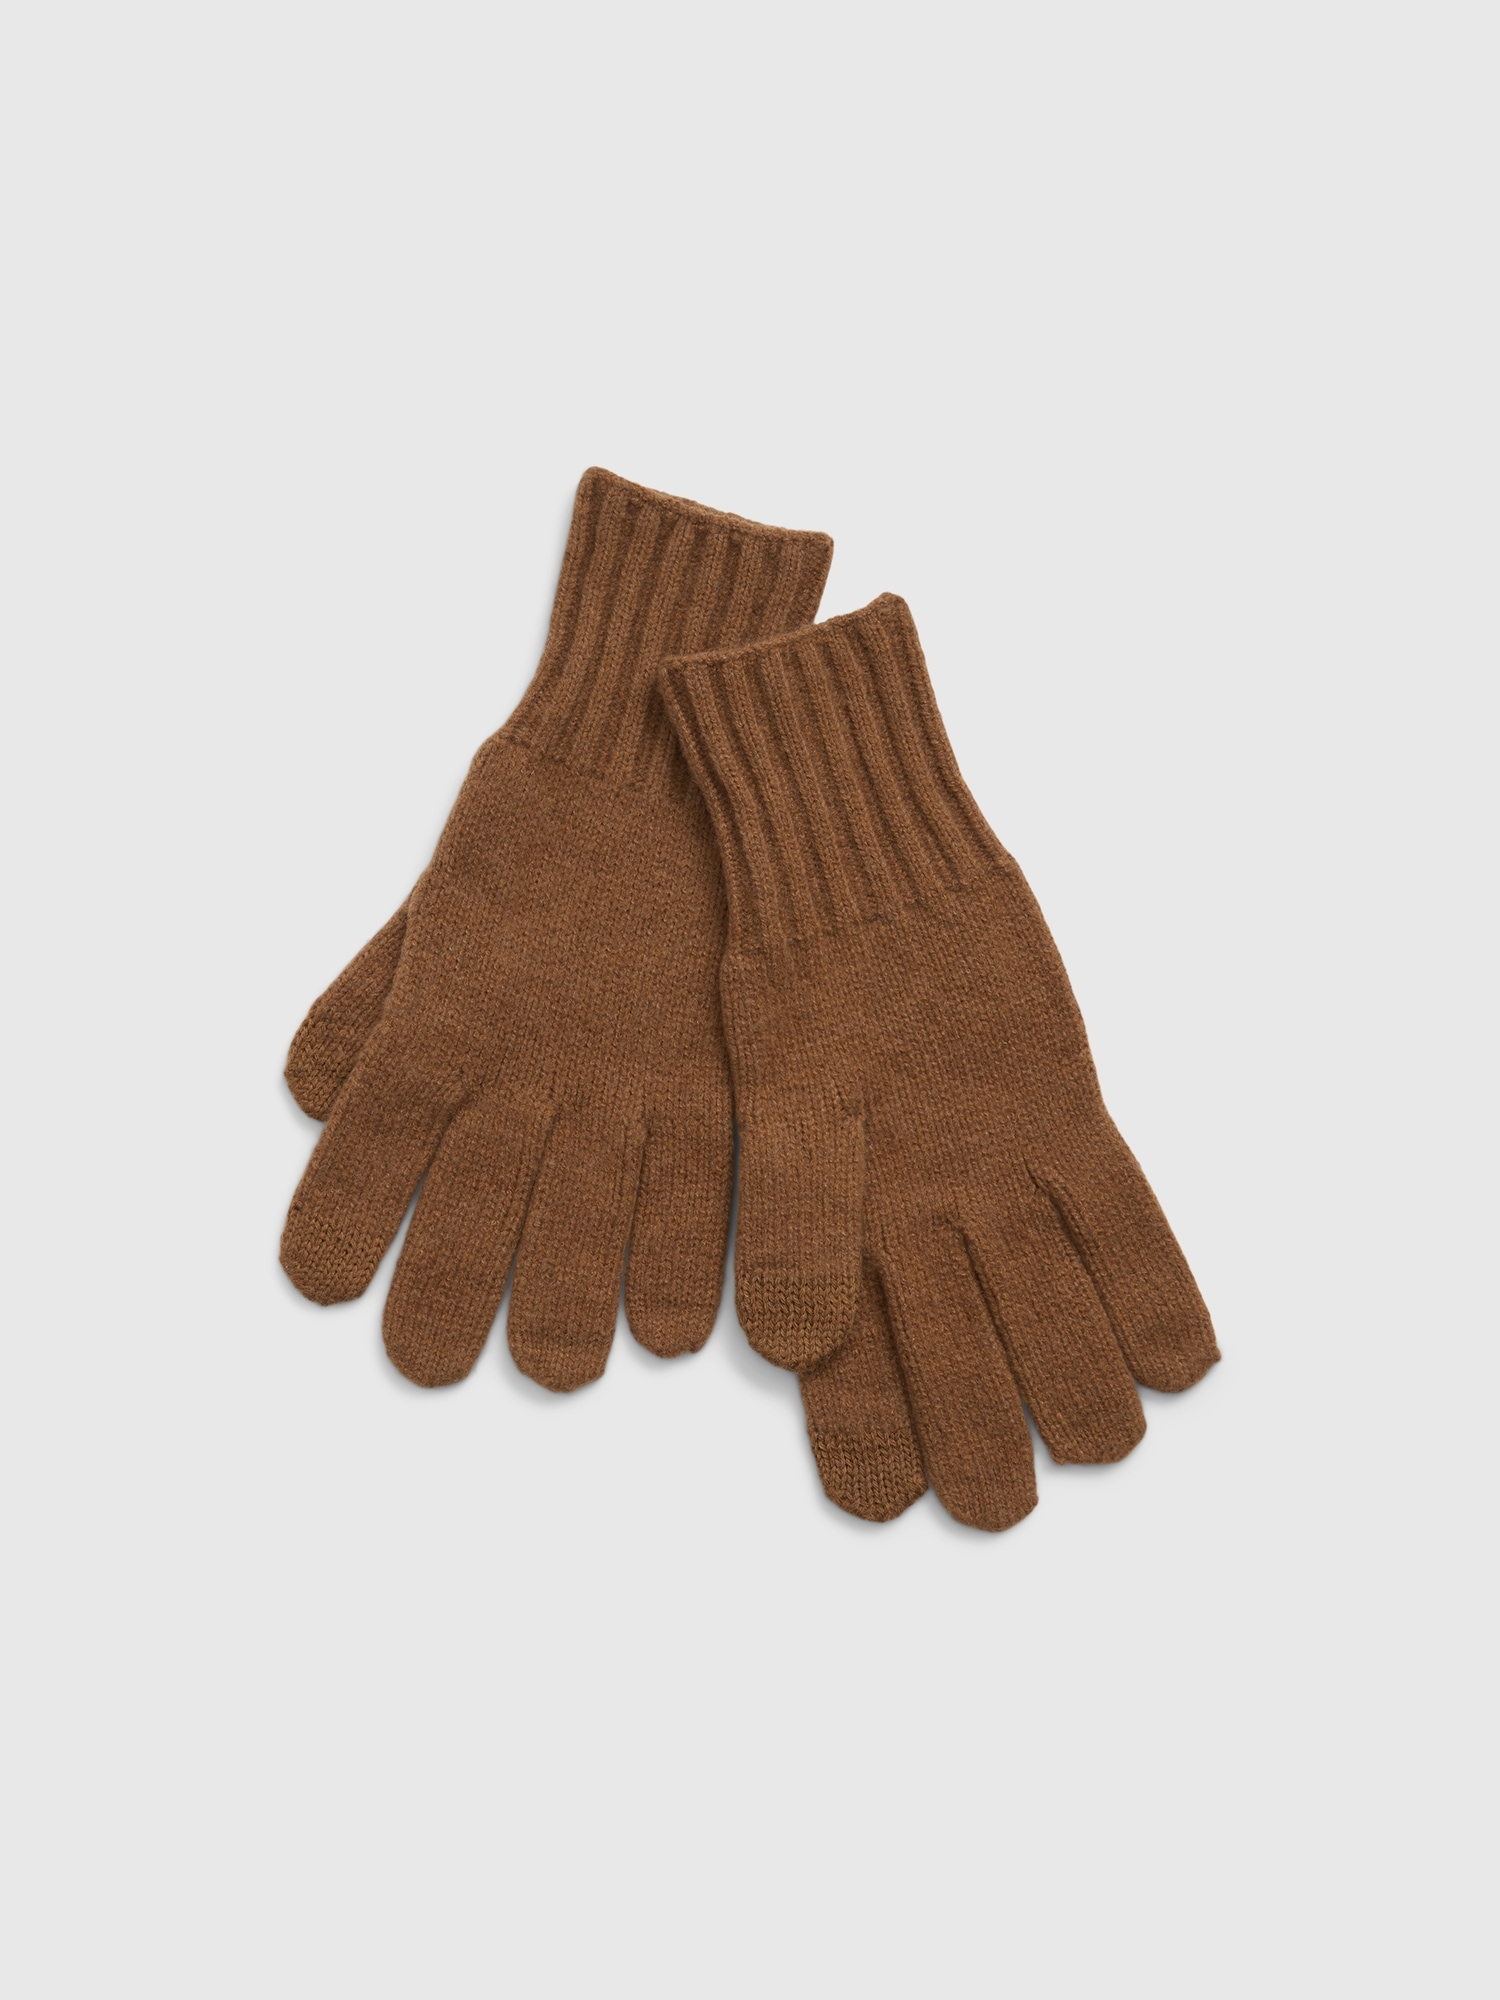 GAP Gloves - Women's